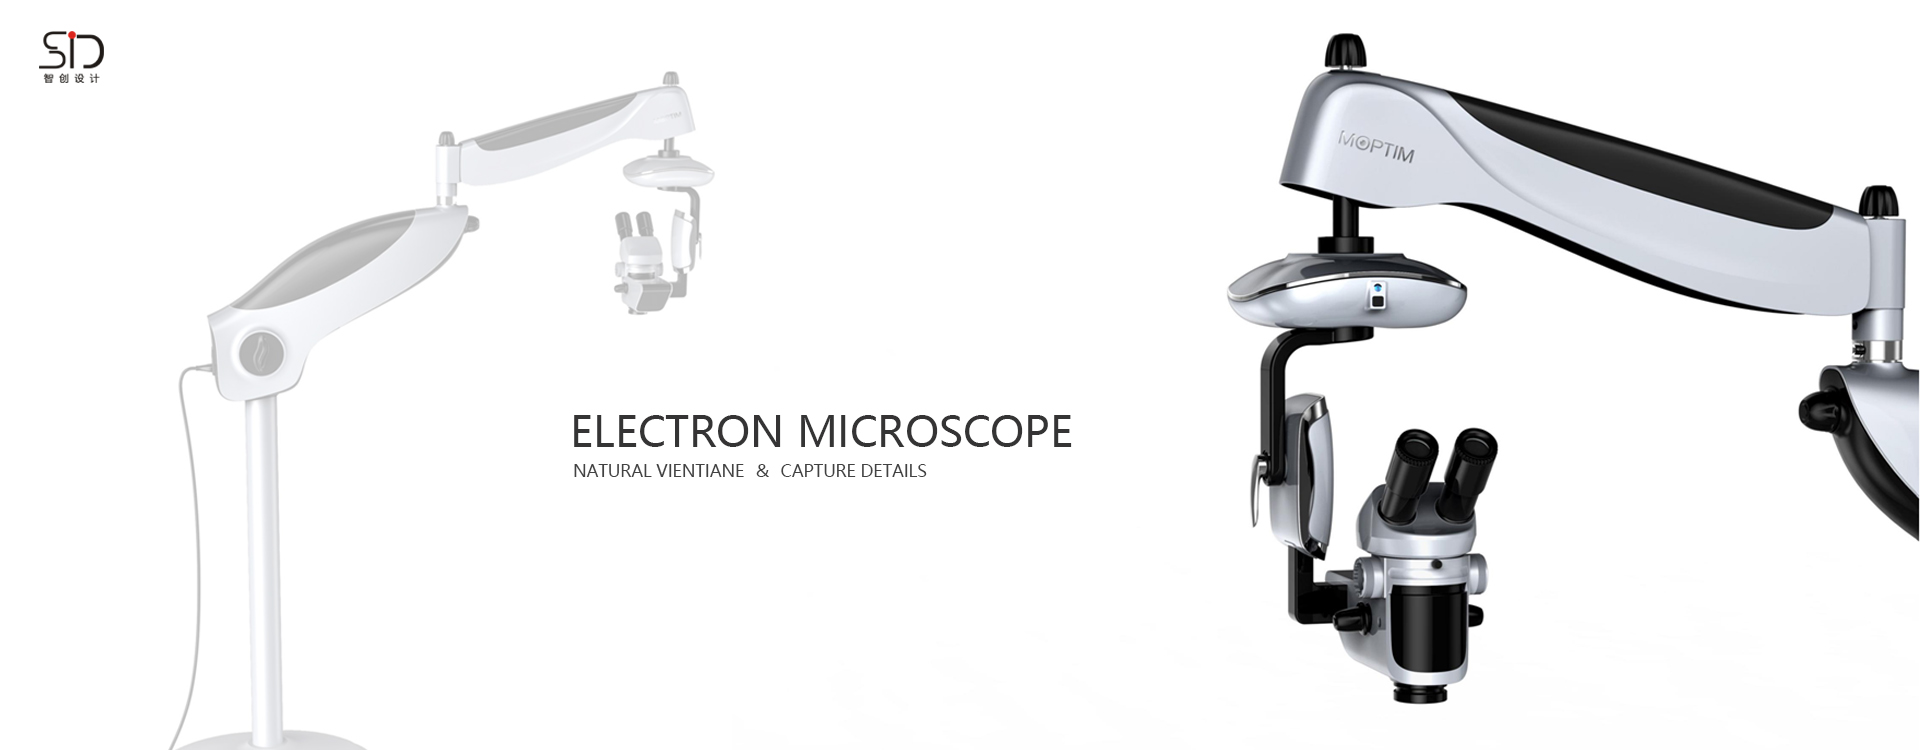 Electron Microscope 电子显微镜 医疗设备设计/医疗器械设计